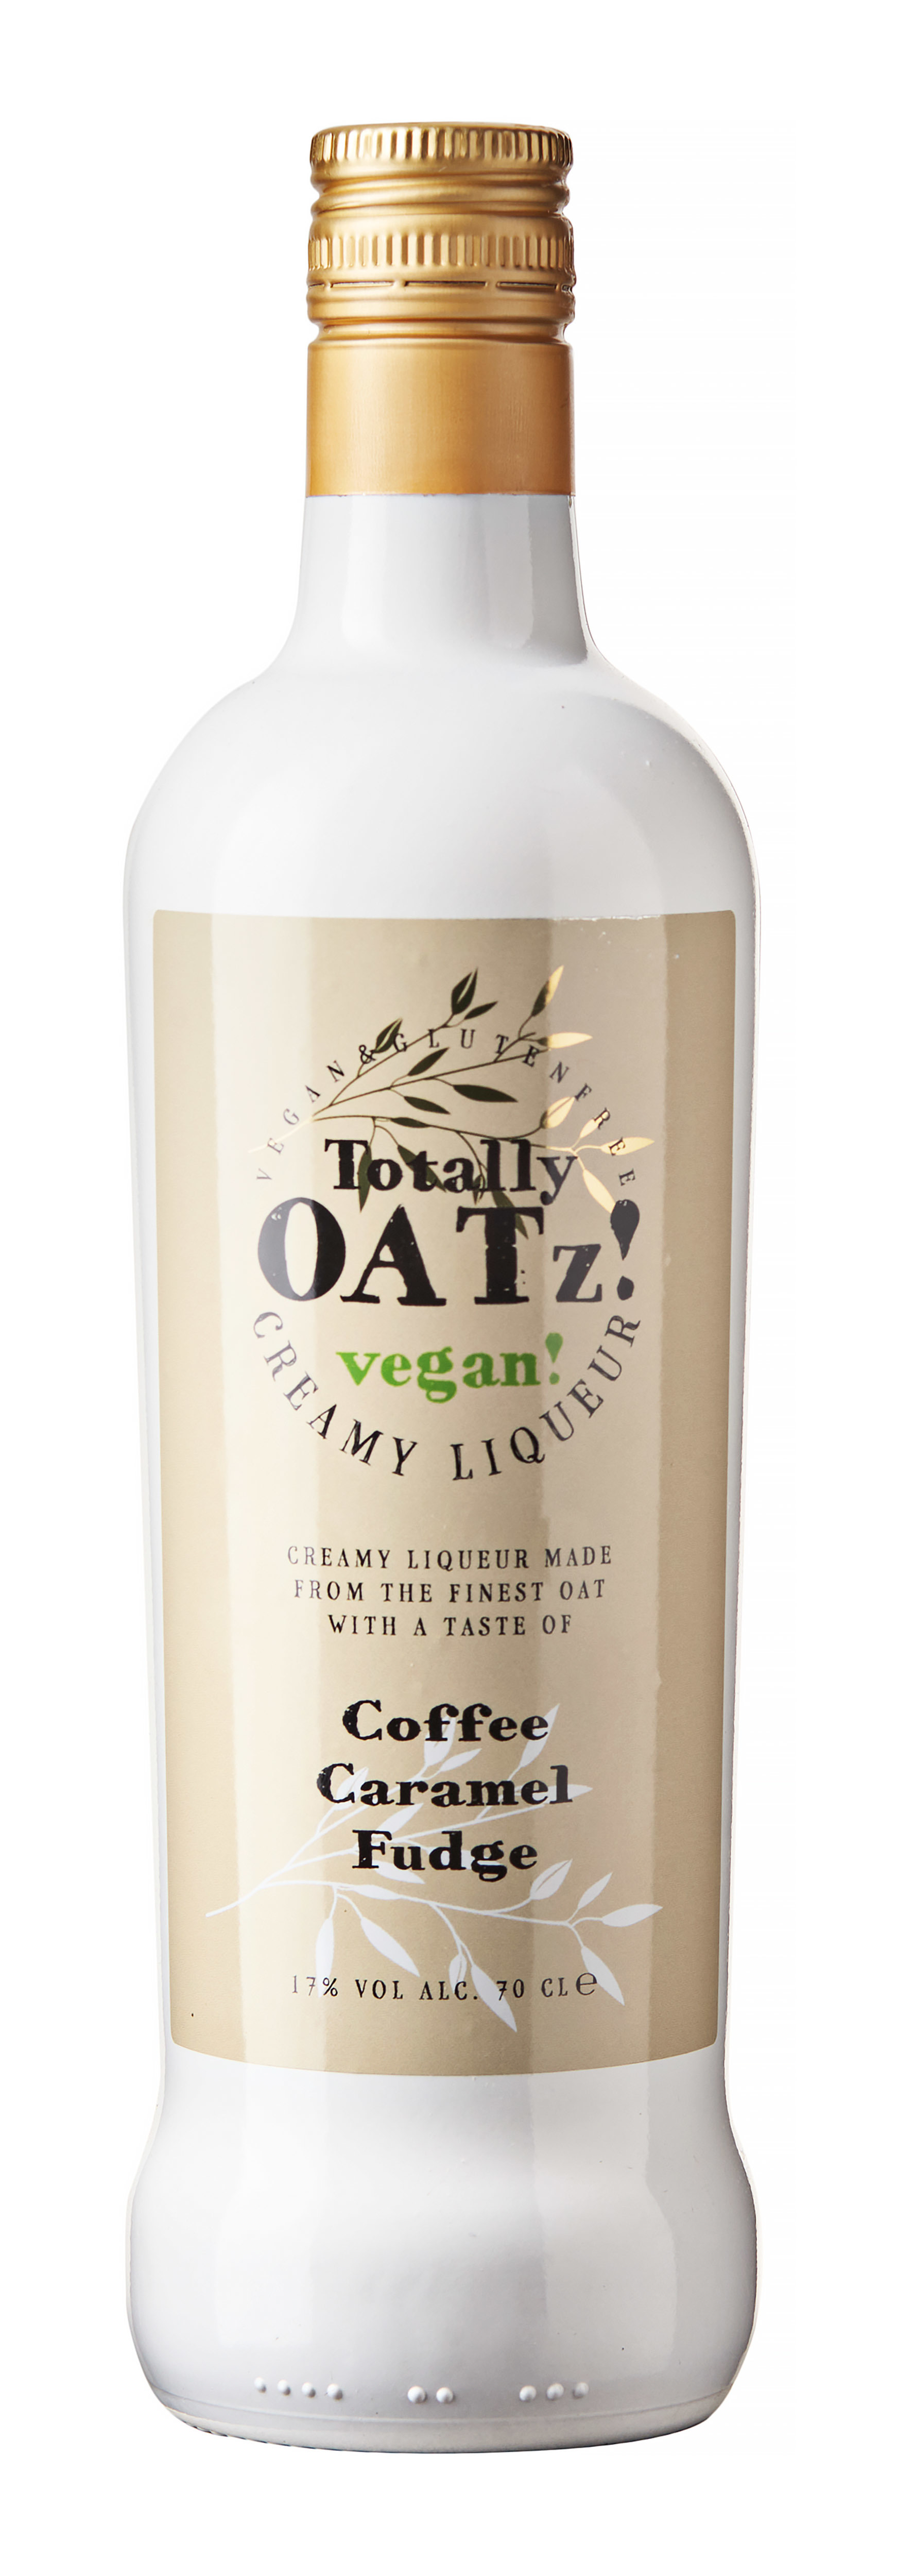 Totally Oatz Creamy Liqueur Coffee Caramel Fudge